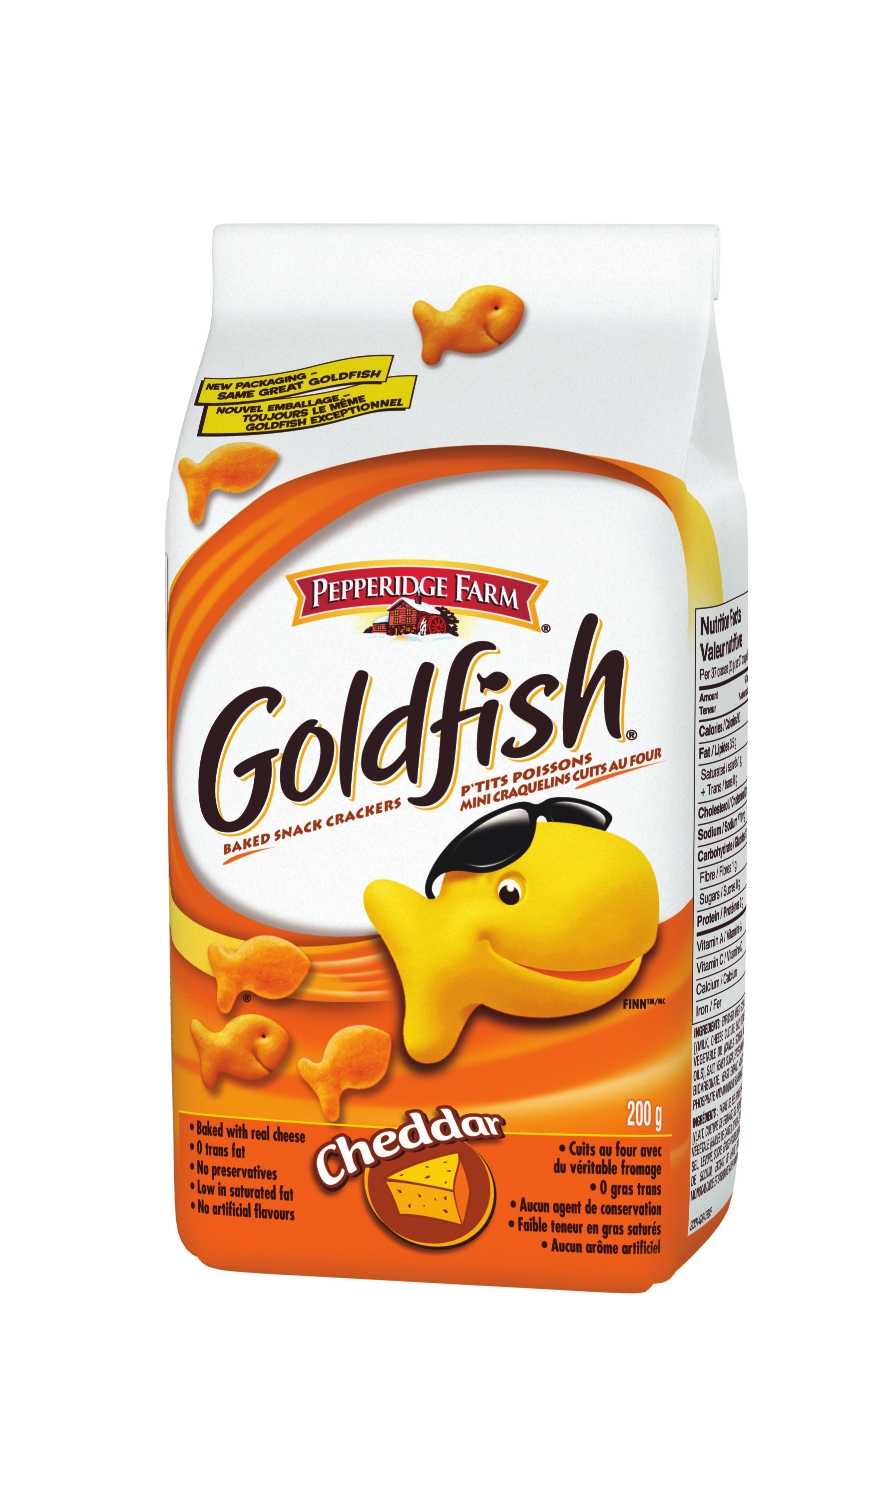 Campbell Goldfish Cheddar 
Crackers 200g 24/cs